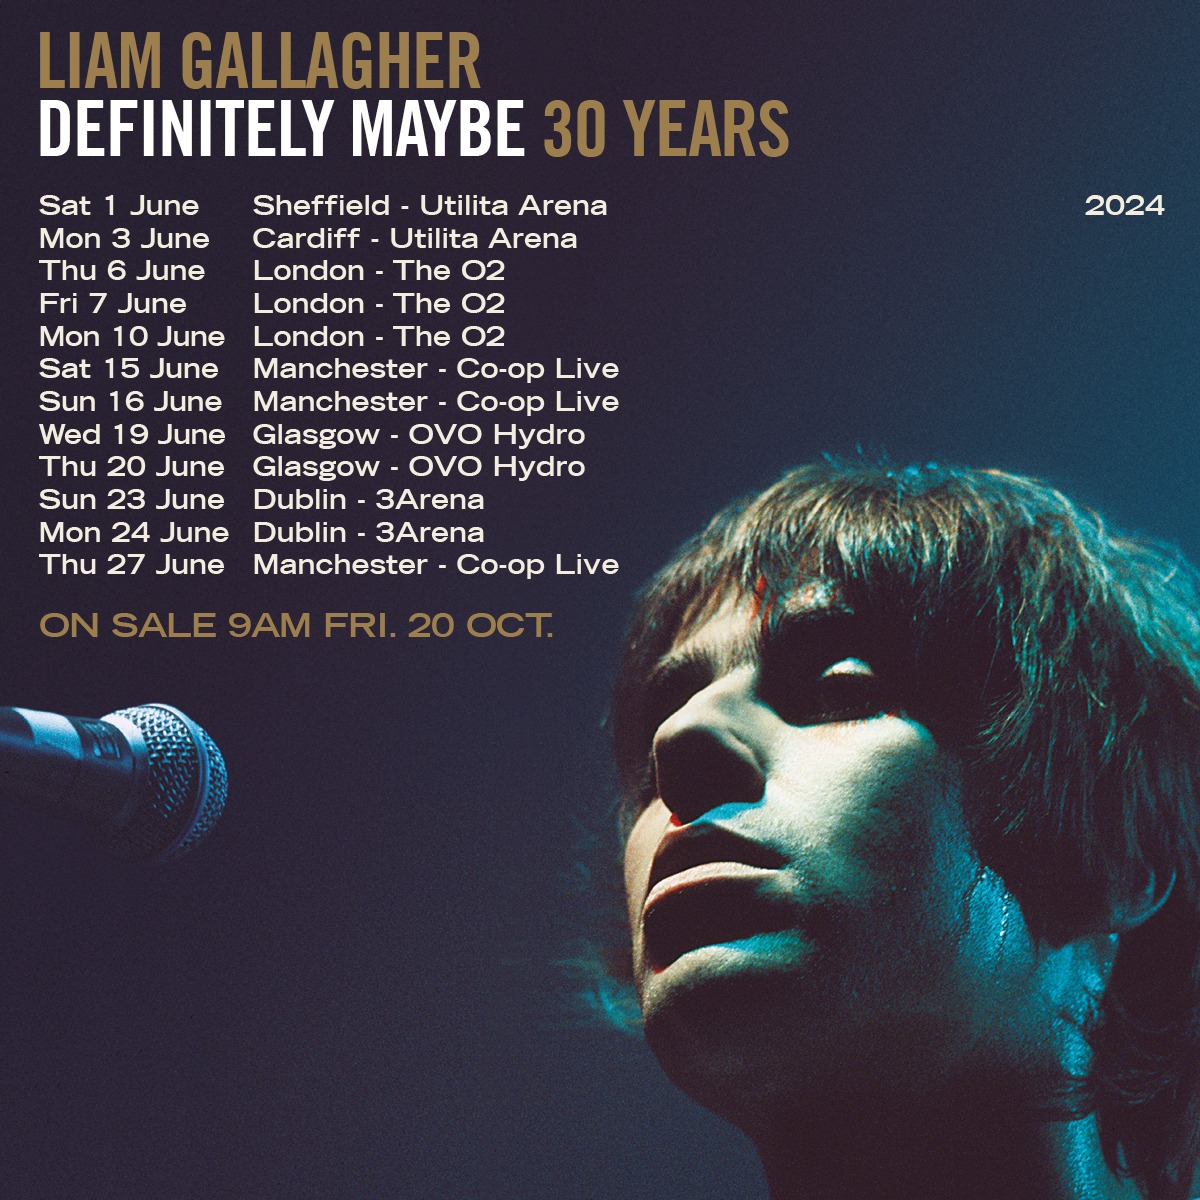 Liam Gallagher - Definitely Maybe 30 Years in der 3Arena Dublin Tickets